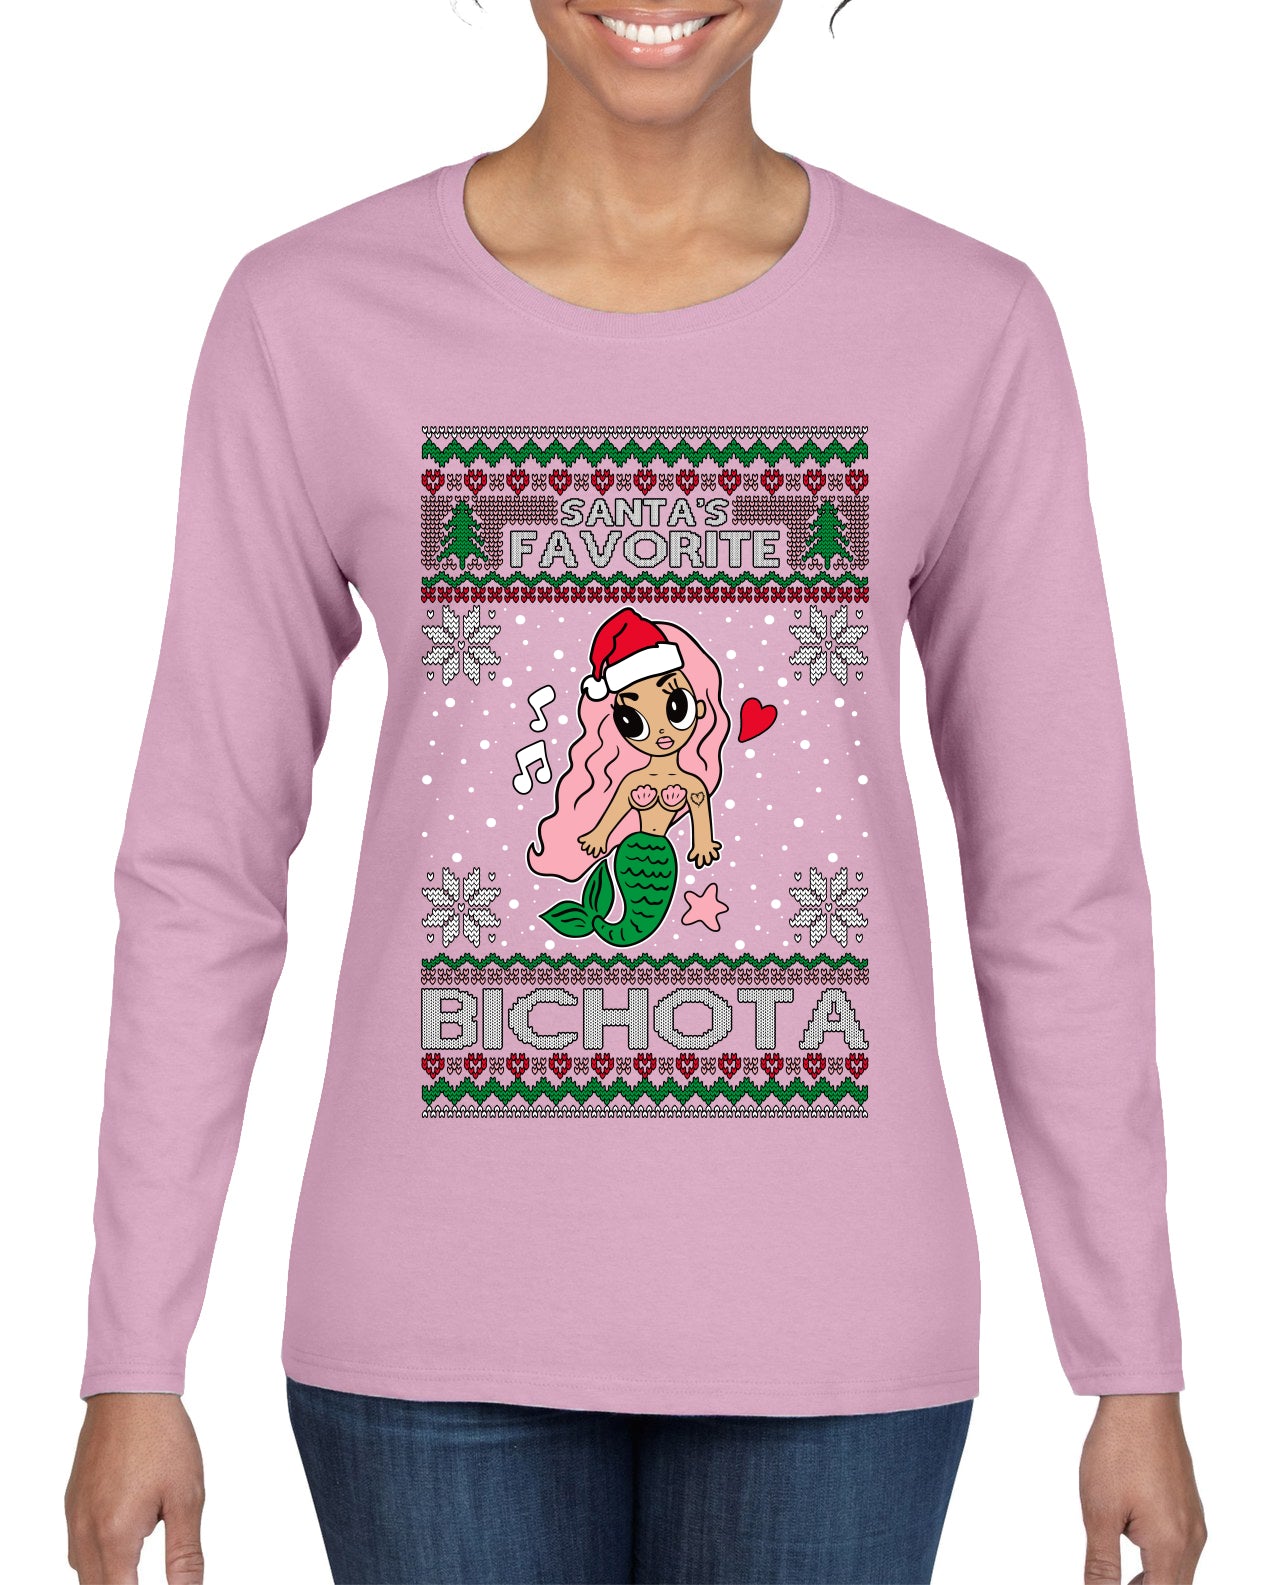 Christmas Karol Santa's Favorite Bichota Ugly Christmas Sweater Womens Graphic Long Sleeve T-Shirt